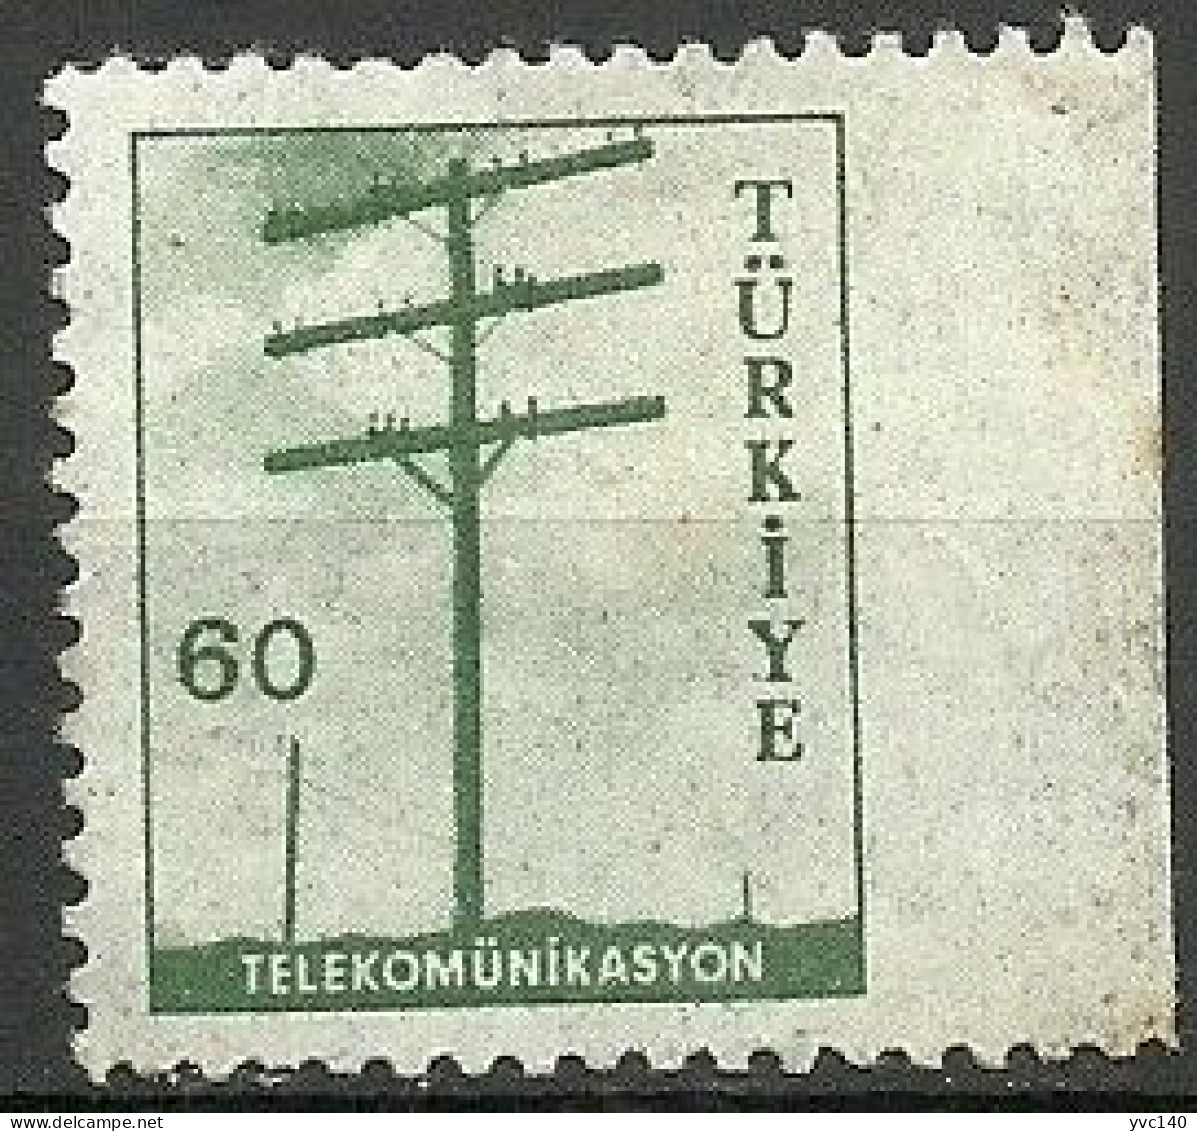 Turkey; 1959 Pictorial Postage Stamp 60 K. ERROR "Imperf. Edge" - Unused Stamps